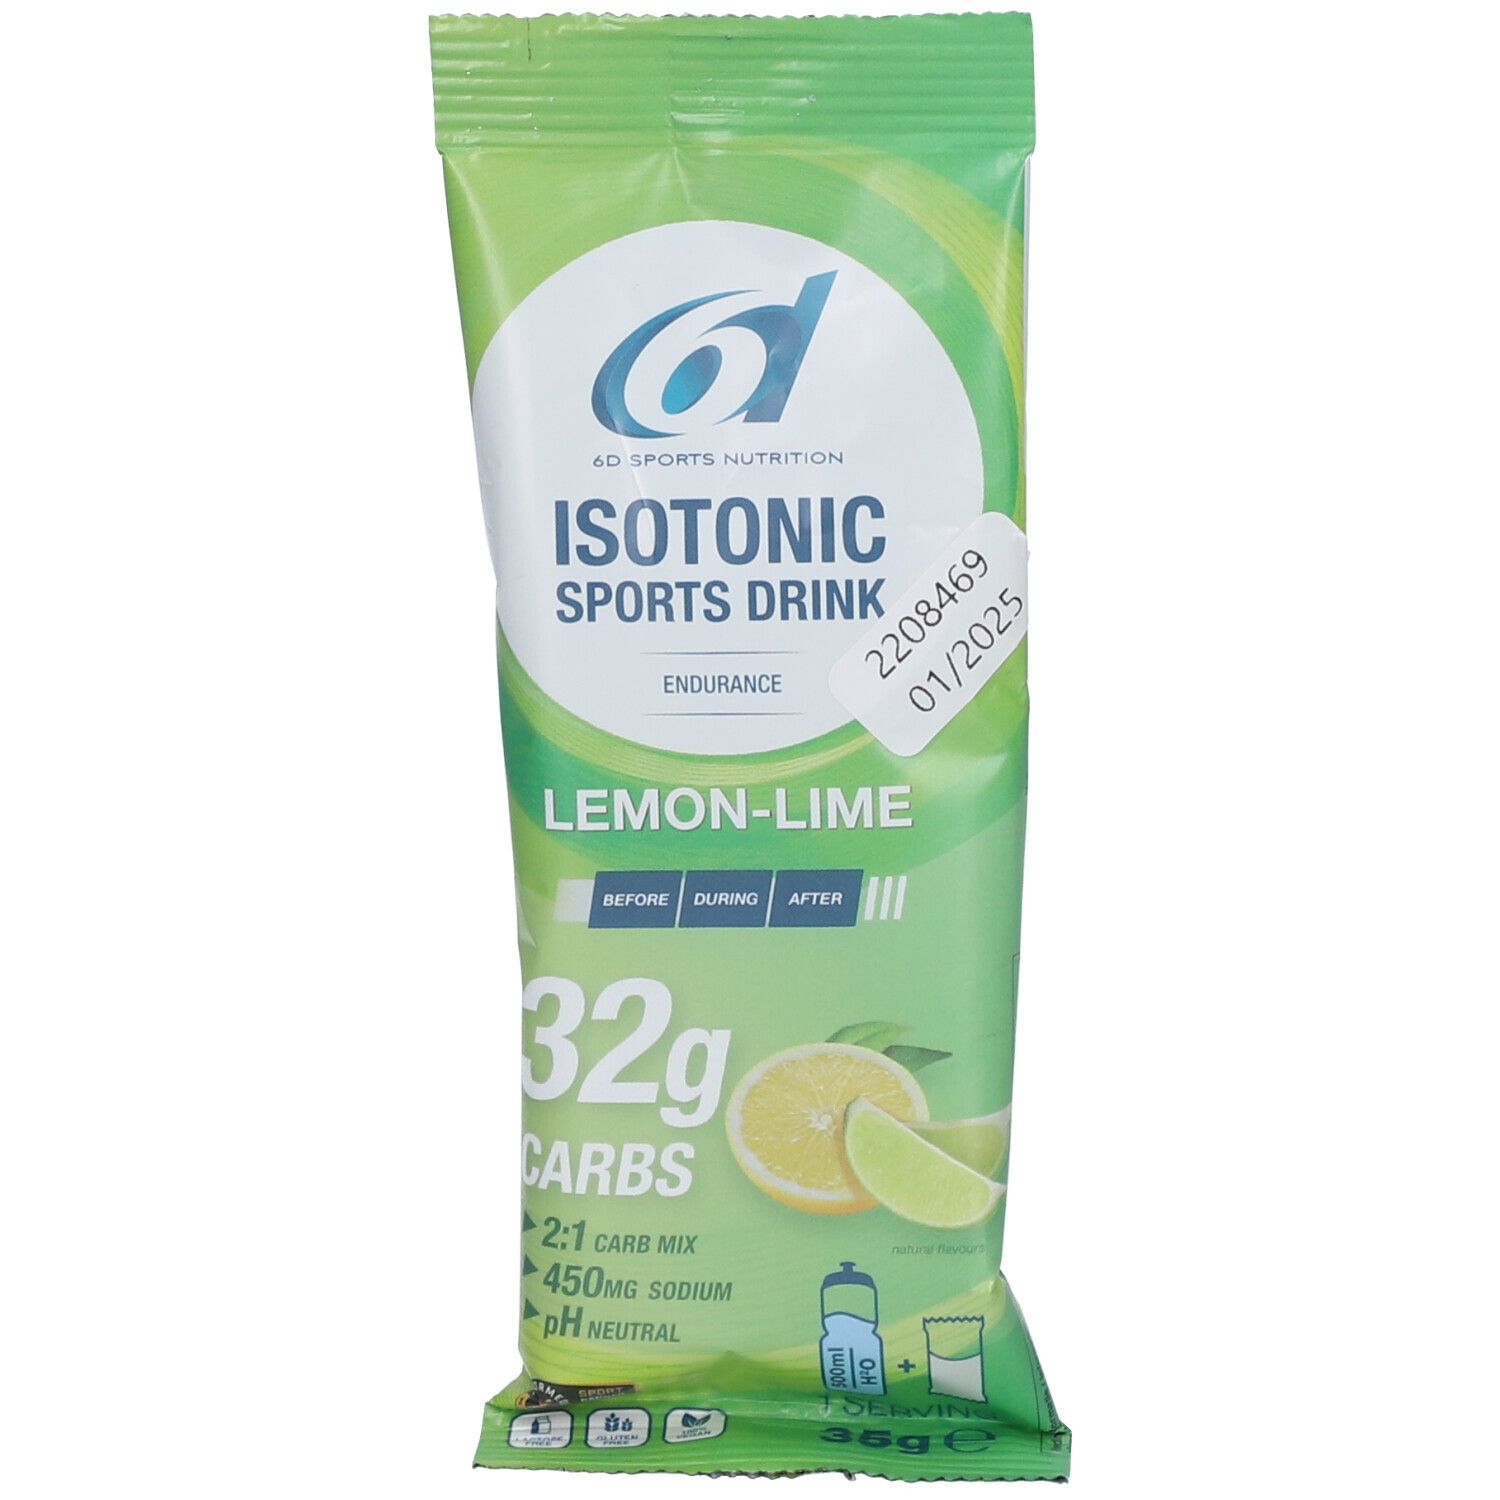 6D Sports Nutrition Isotonic Sports Drink - Lemon-Lime